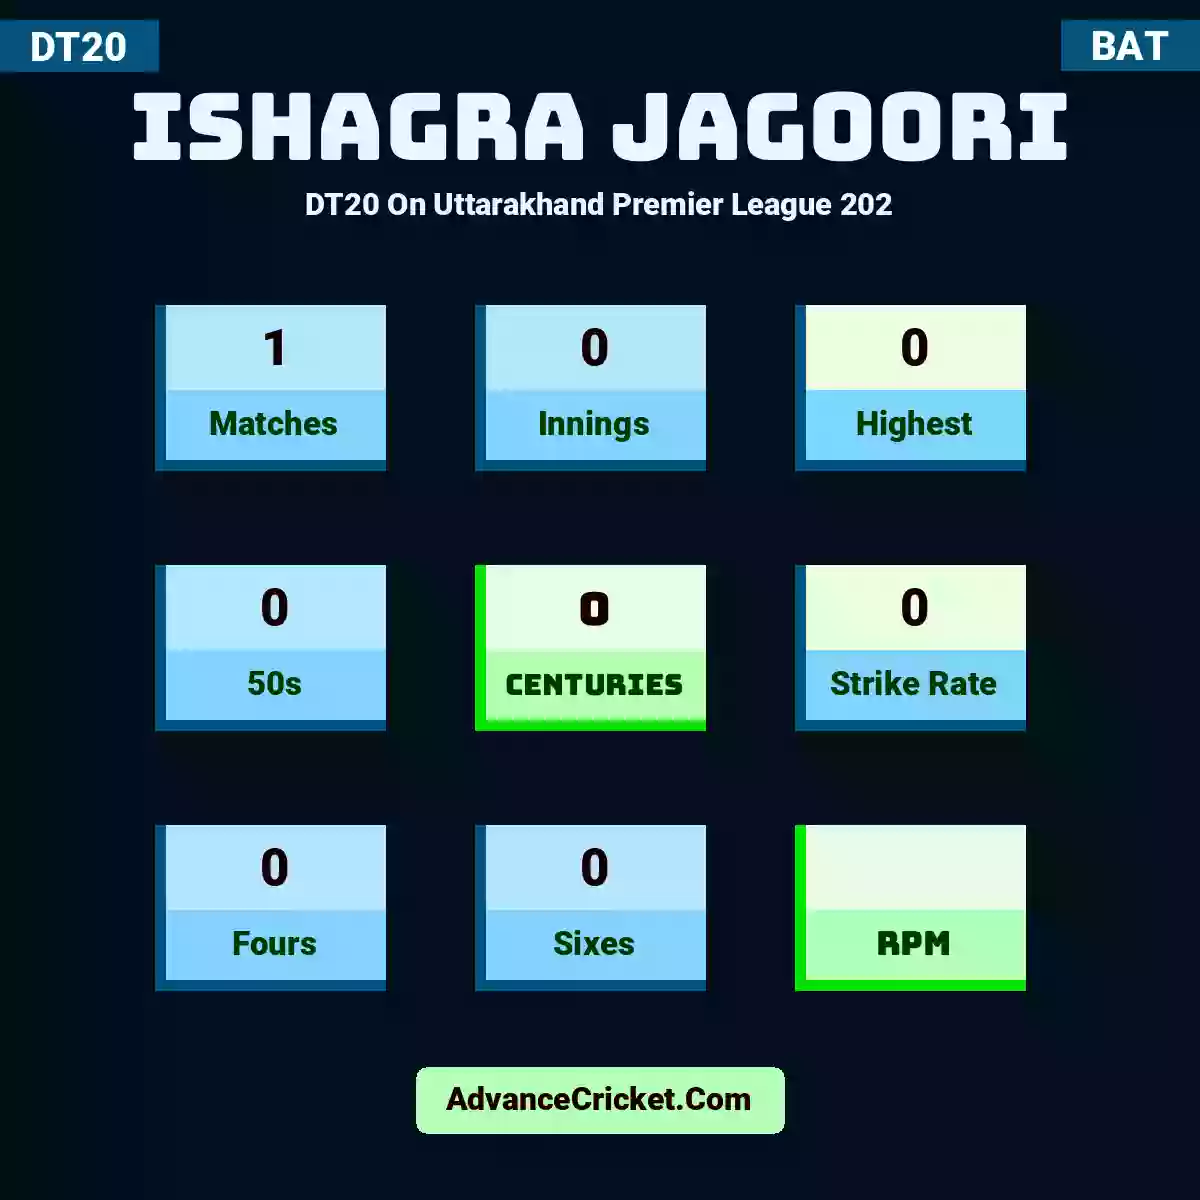 Ishagra Jagoori DT20  On Uttarakhand Premier League 202, Ishagra Jagoori played 1 matches, scored 0 runs as highest, 0 half-centuries, and 0 centuries, with a strike rate of 0. I.Jagoori hit 0 fours and 0 sixes.